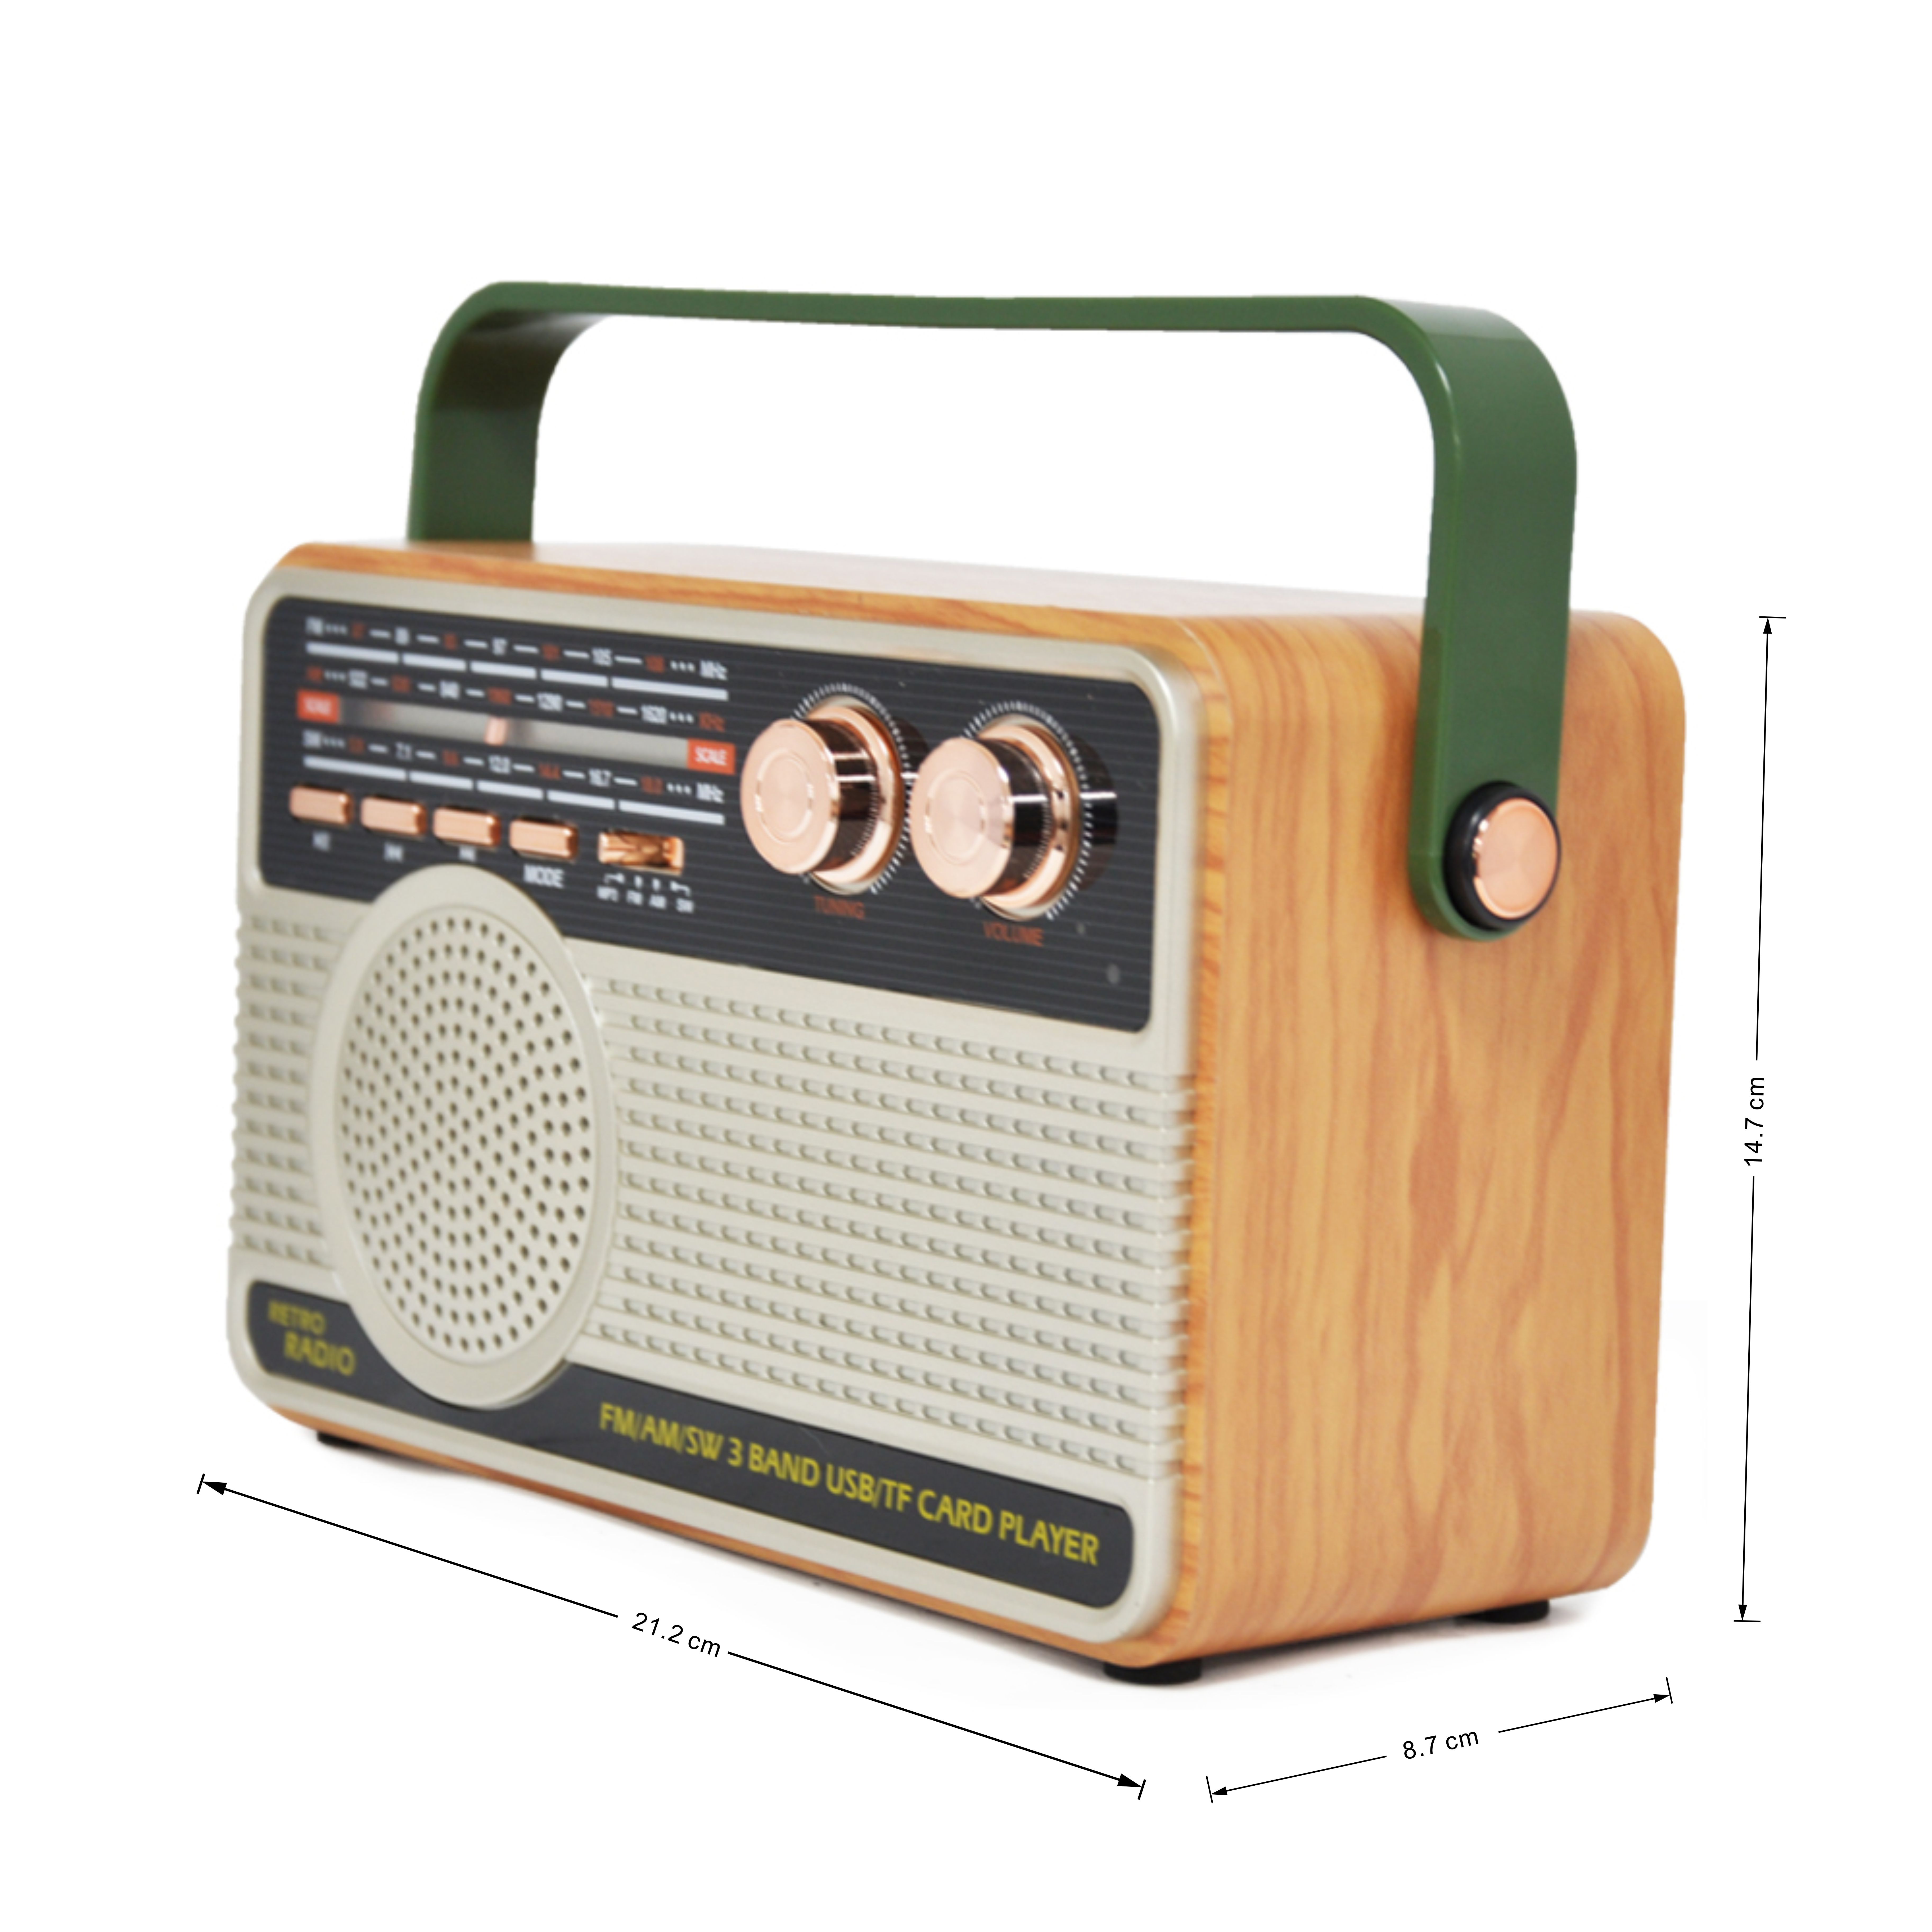 Portable vintage emergency broadcasting equipment usb sd card reader speaker other transmitter 3 way am fm sw radio 506